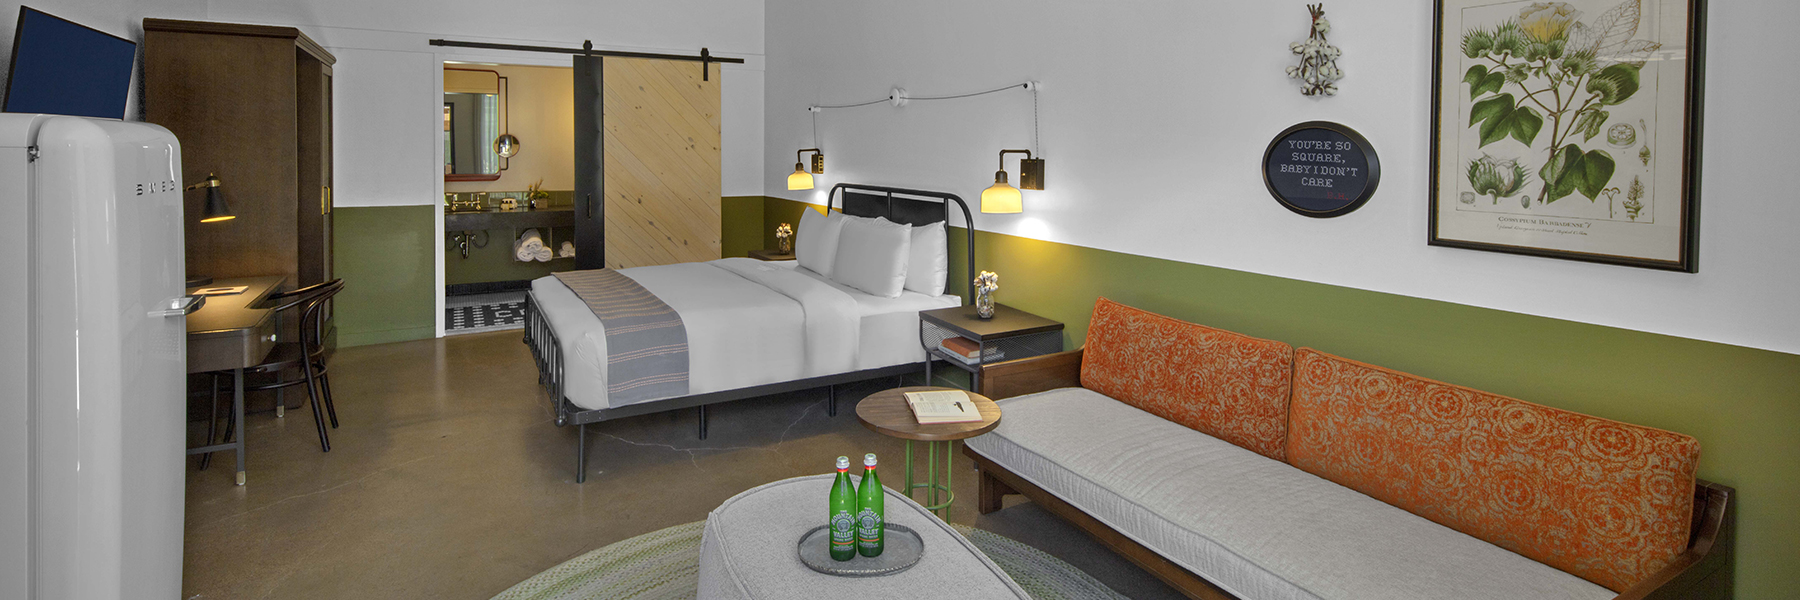 Rooms & Suites at Cotton Court Hotel, Lubbock